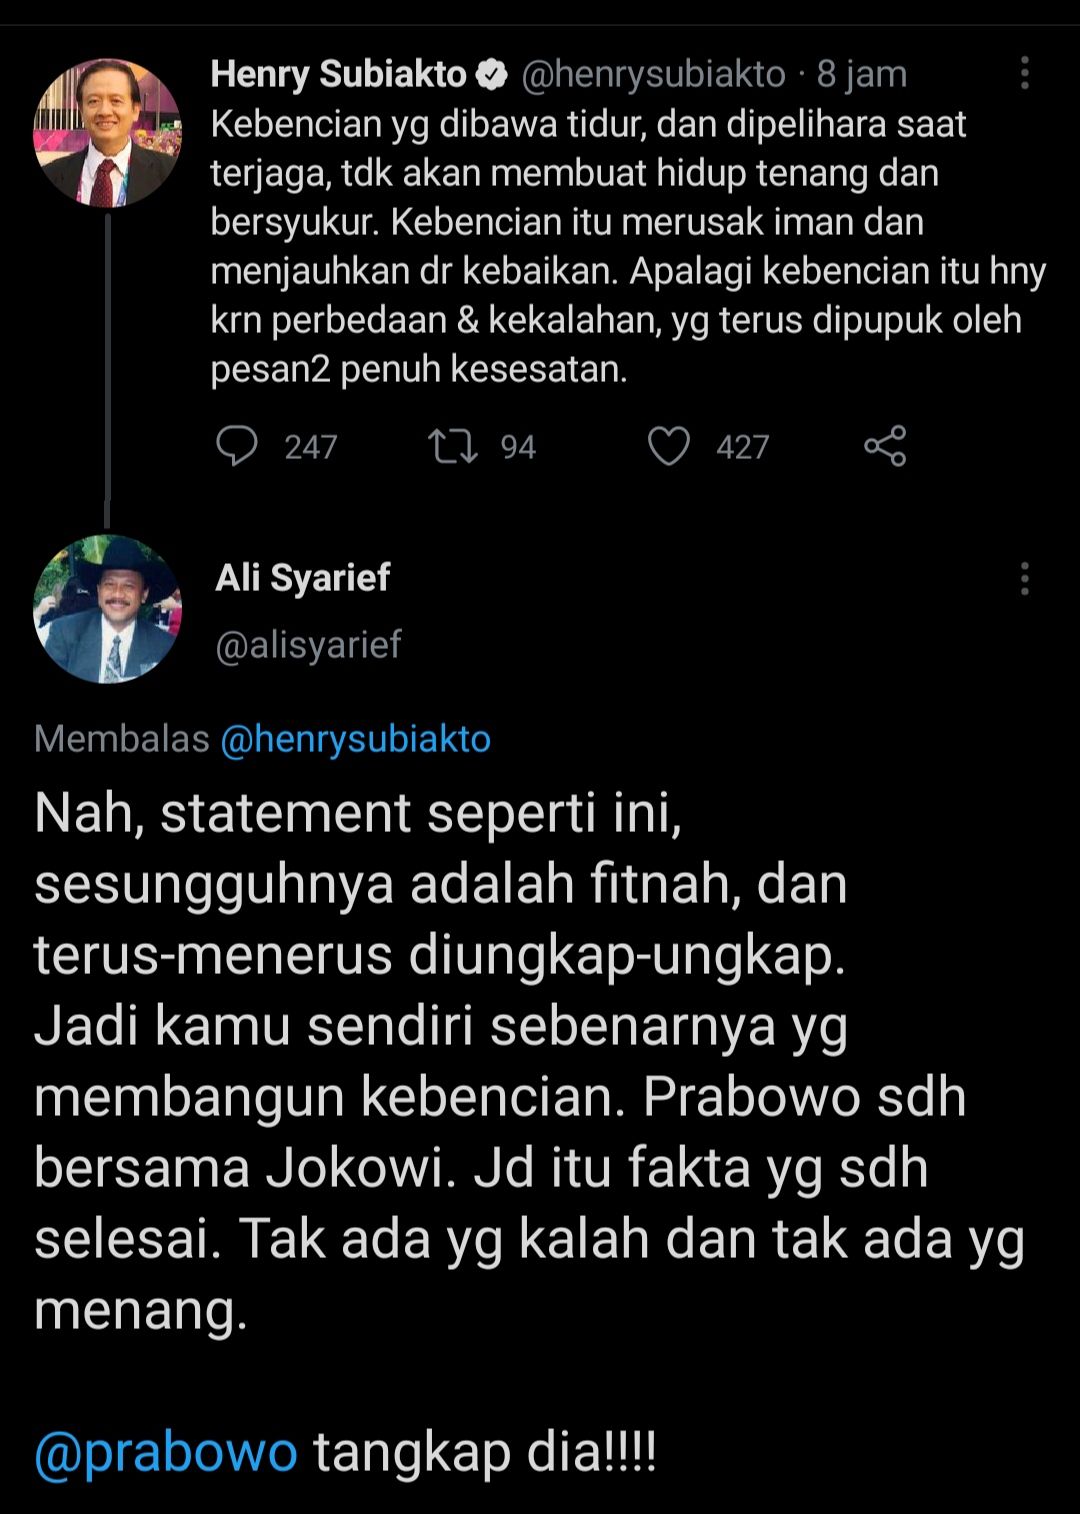 Ali Syarief menilai cuitan Henry Subiakto soal kebencian sesungguhnya adalah fitnah. Ia menilai cuitannya itu menyinggung soal Prabowo dan Jokowi.